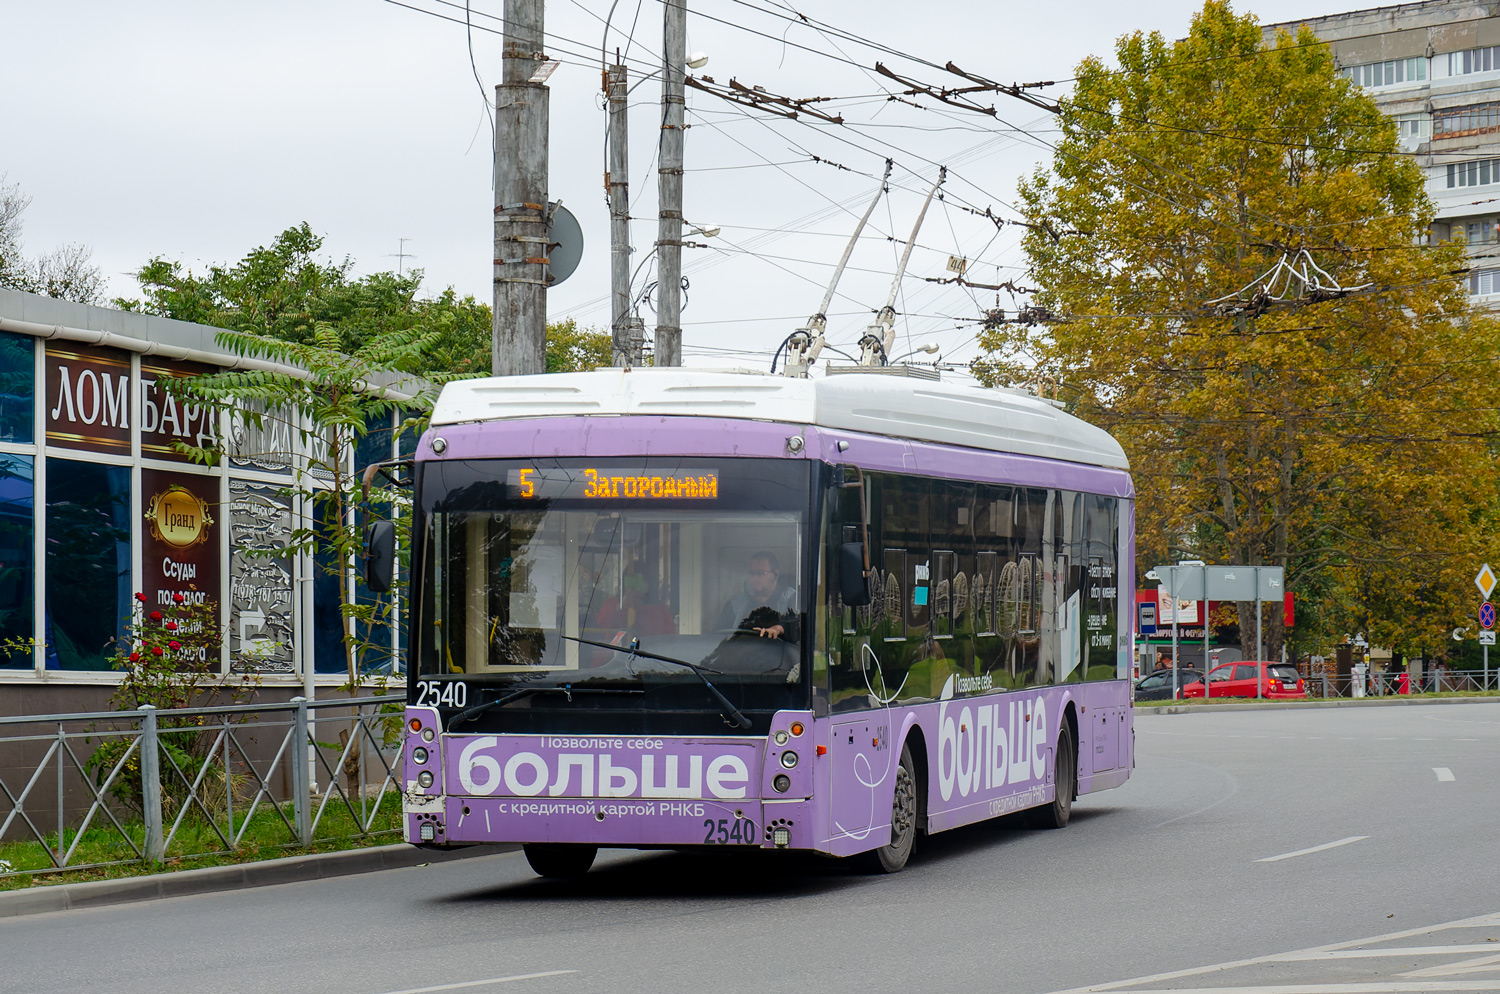 Krimski trolejbus, Trolza-5265.02 “Megapolis” č. 2540